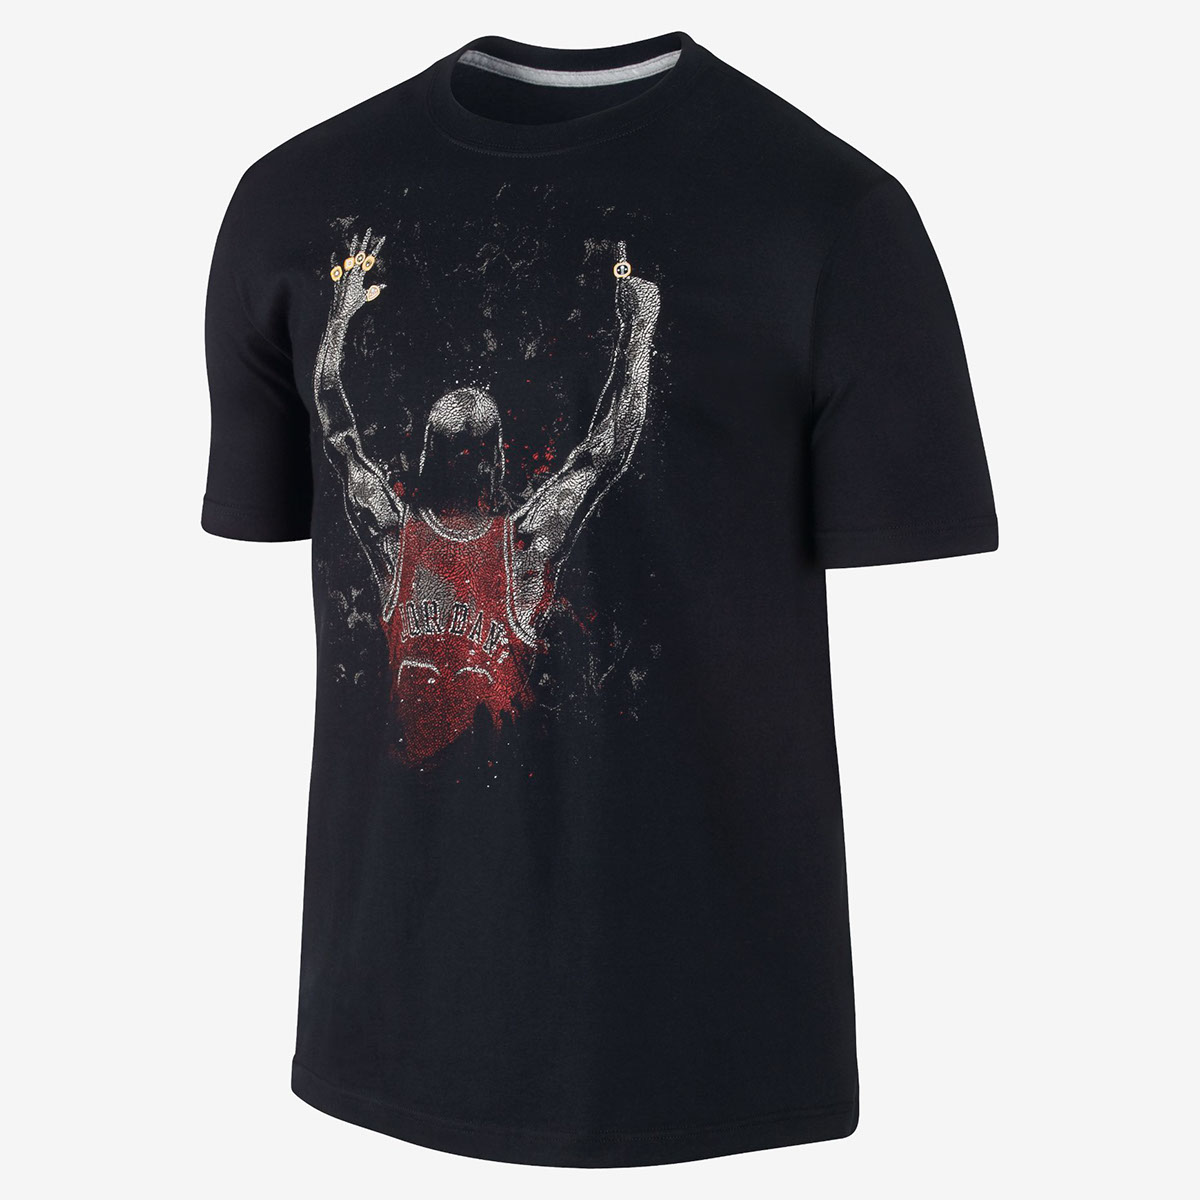 Nike jordan Michael Jordan jordan brand nike apparel t-shirt t-shirts tshirt tshirts graphics lettering type treatment